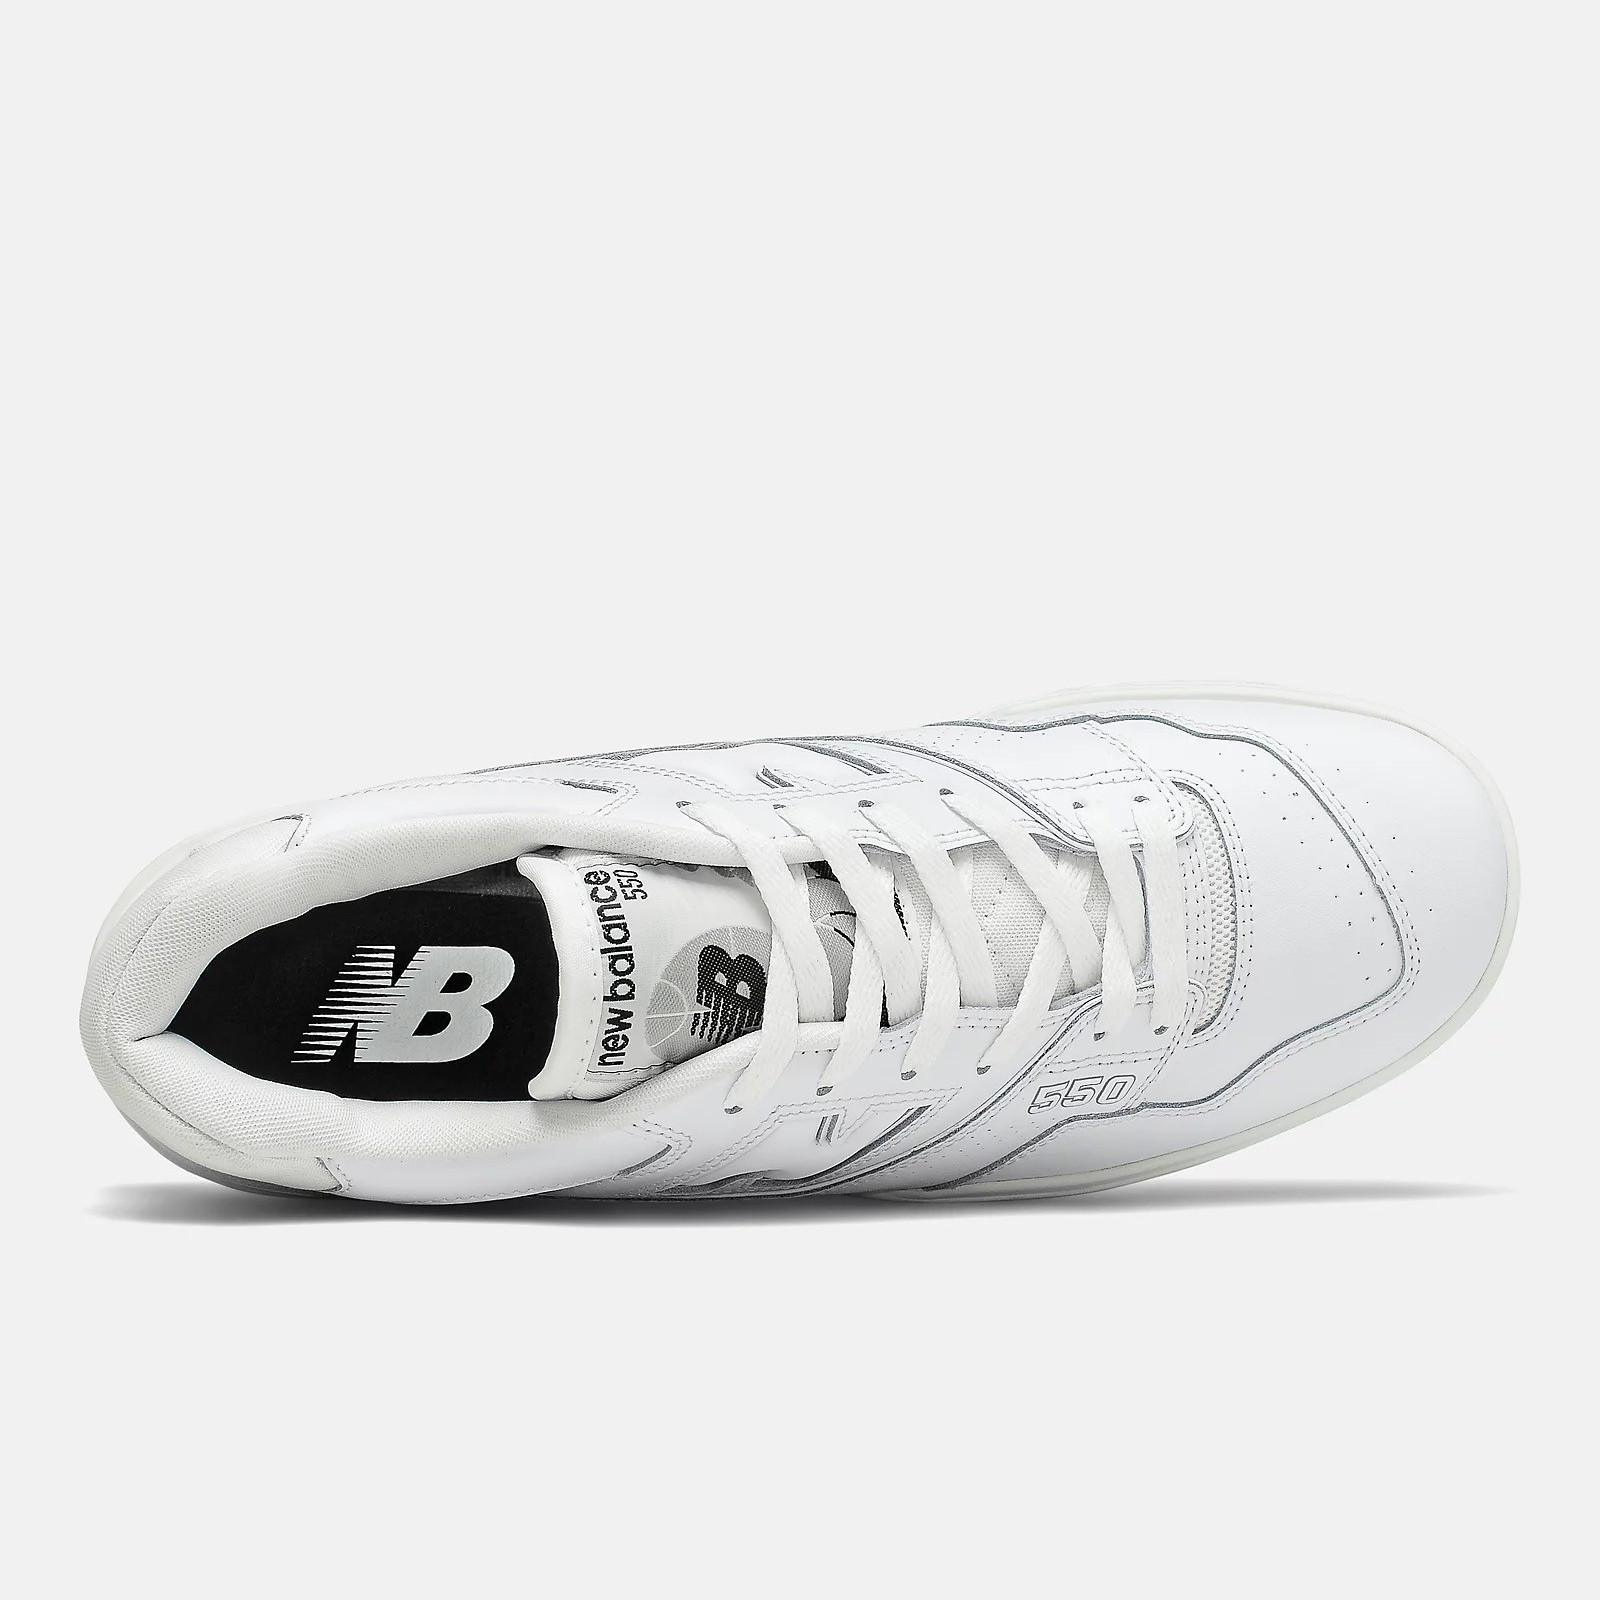 New Balance 550
White / Grey